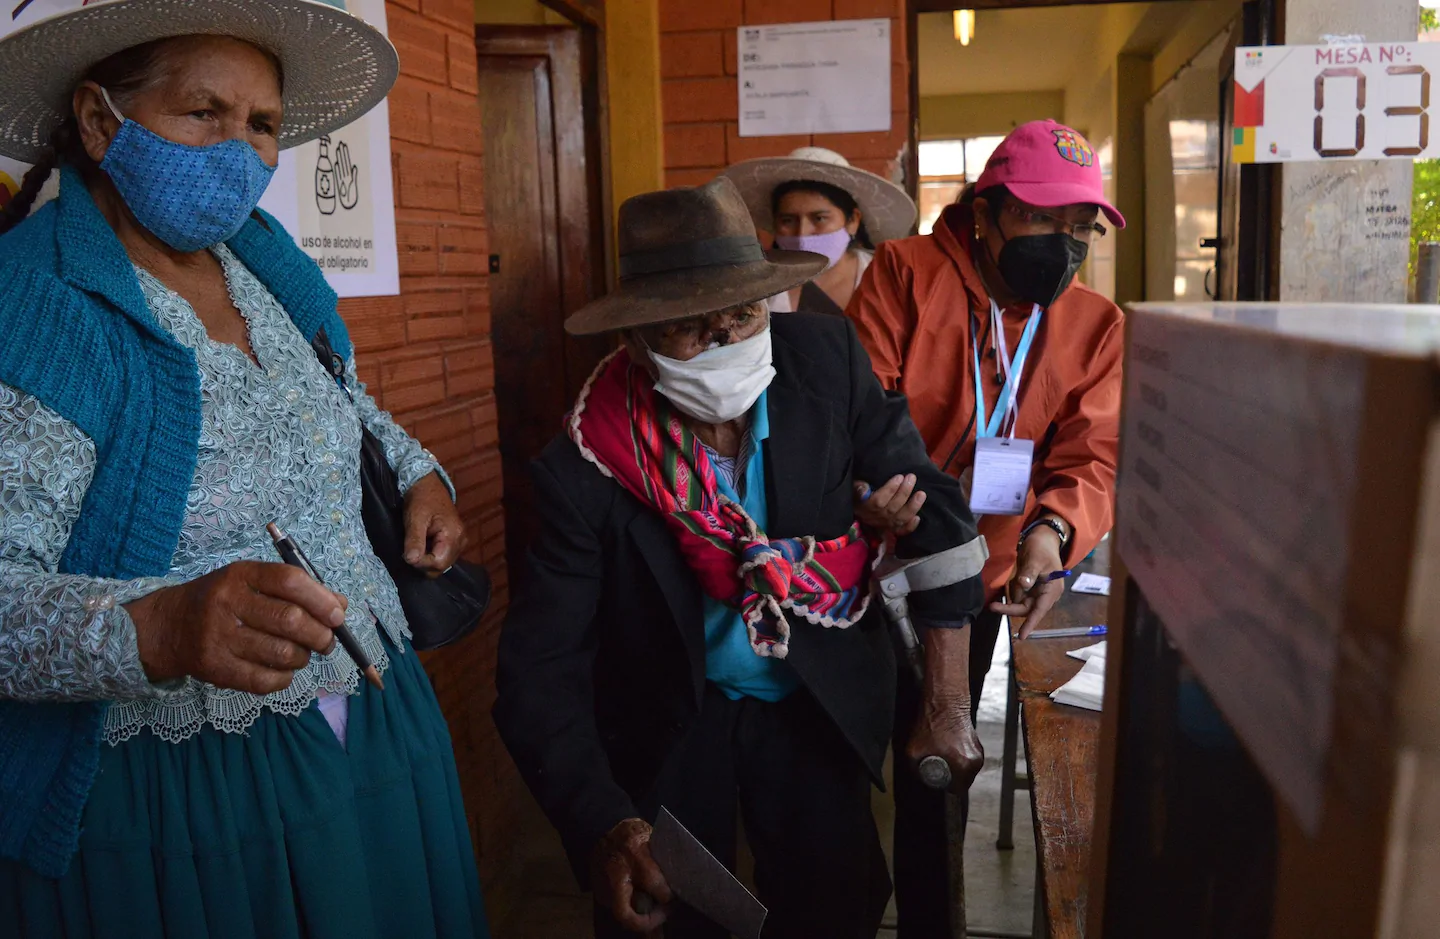 Bolivia election: Evo Morales' MAS socialists seek return; Luis Arce leads Carlos Mesa, Luis Camacho in polls